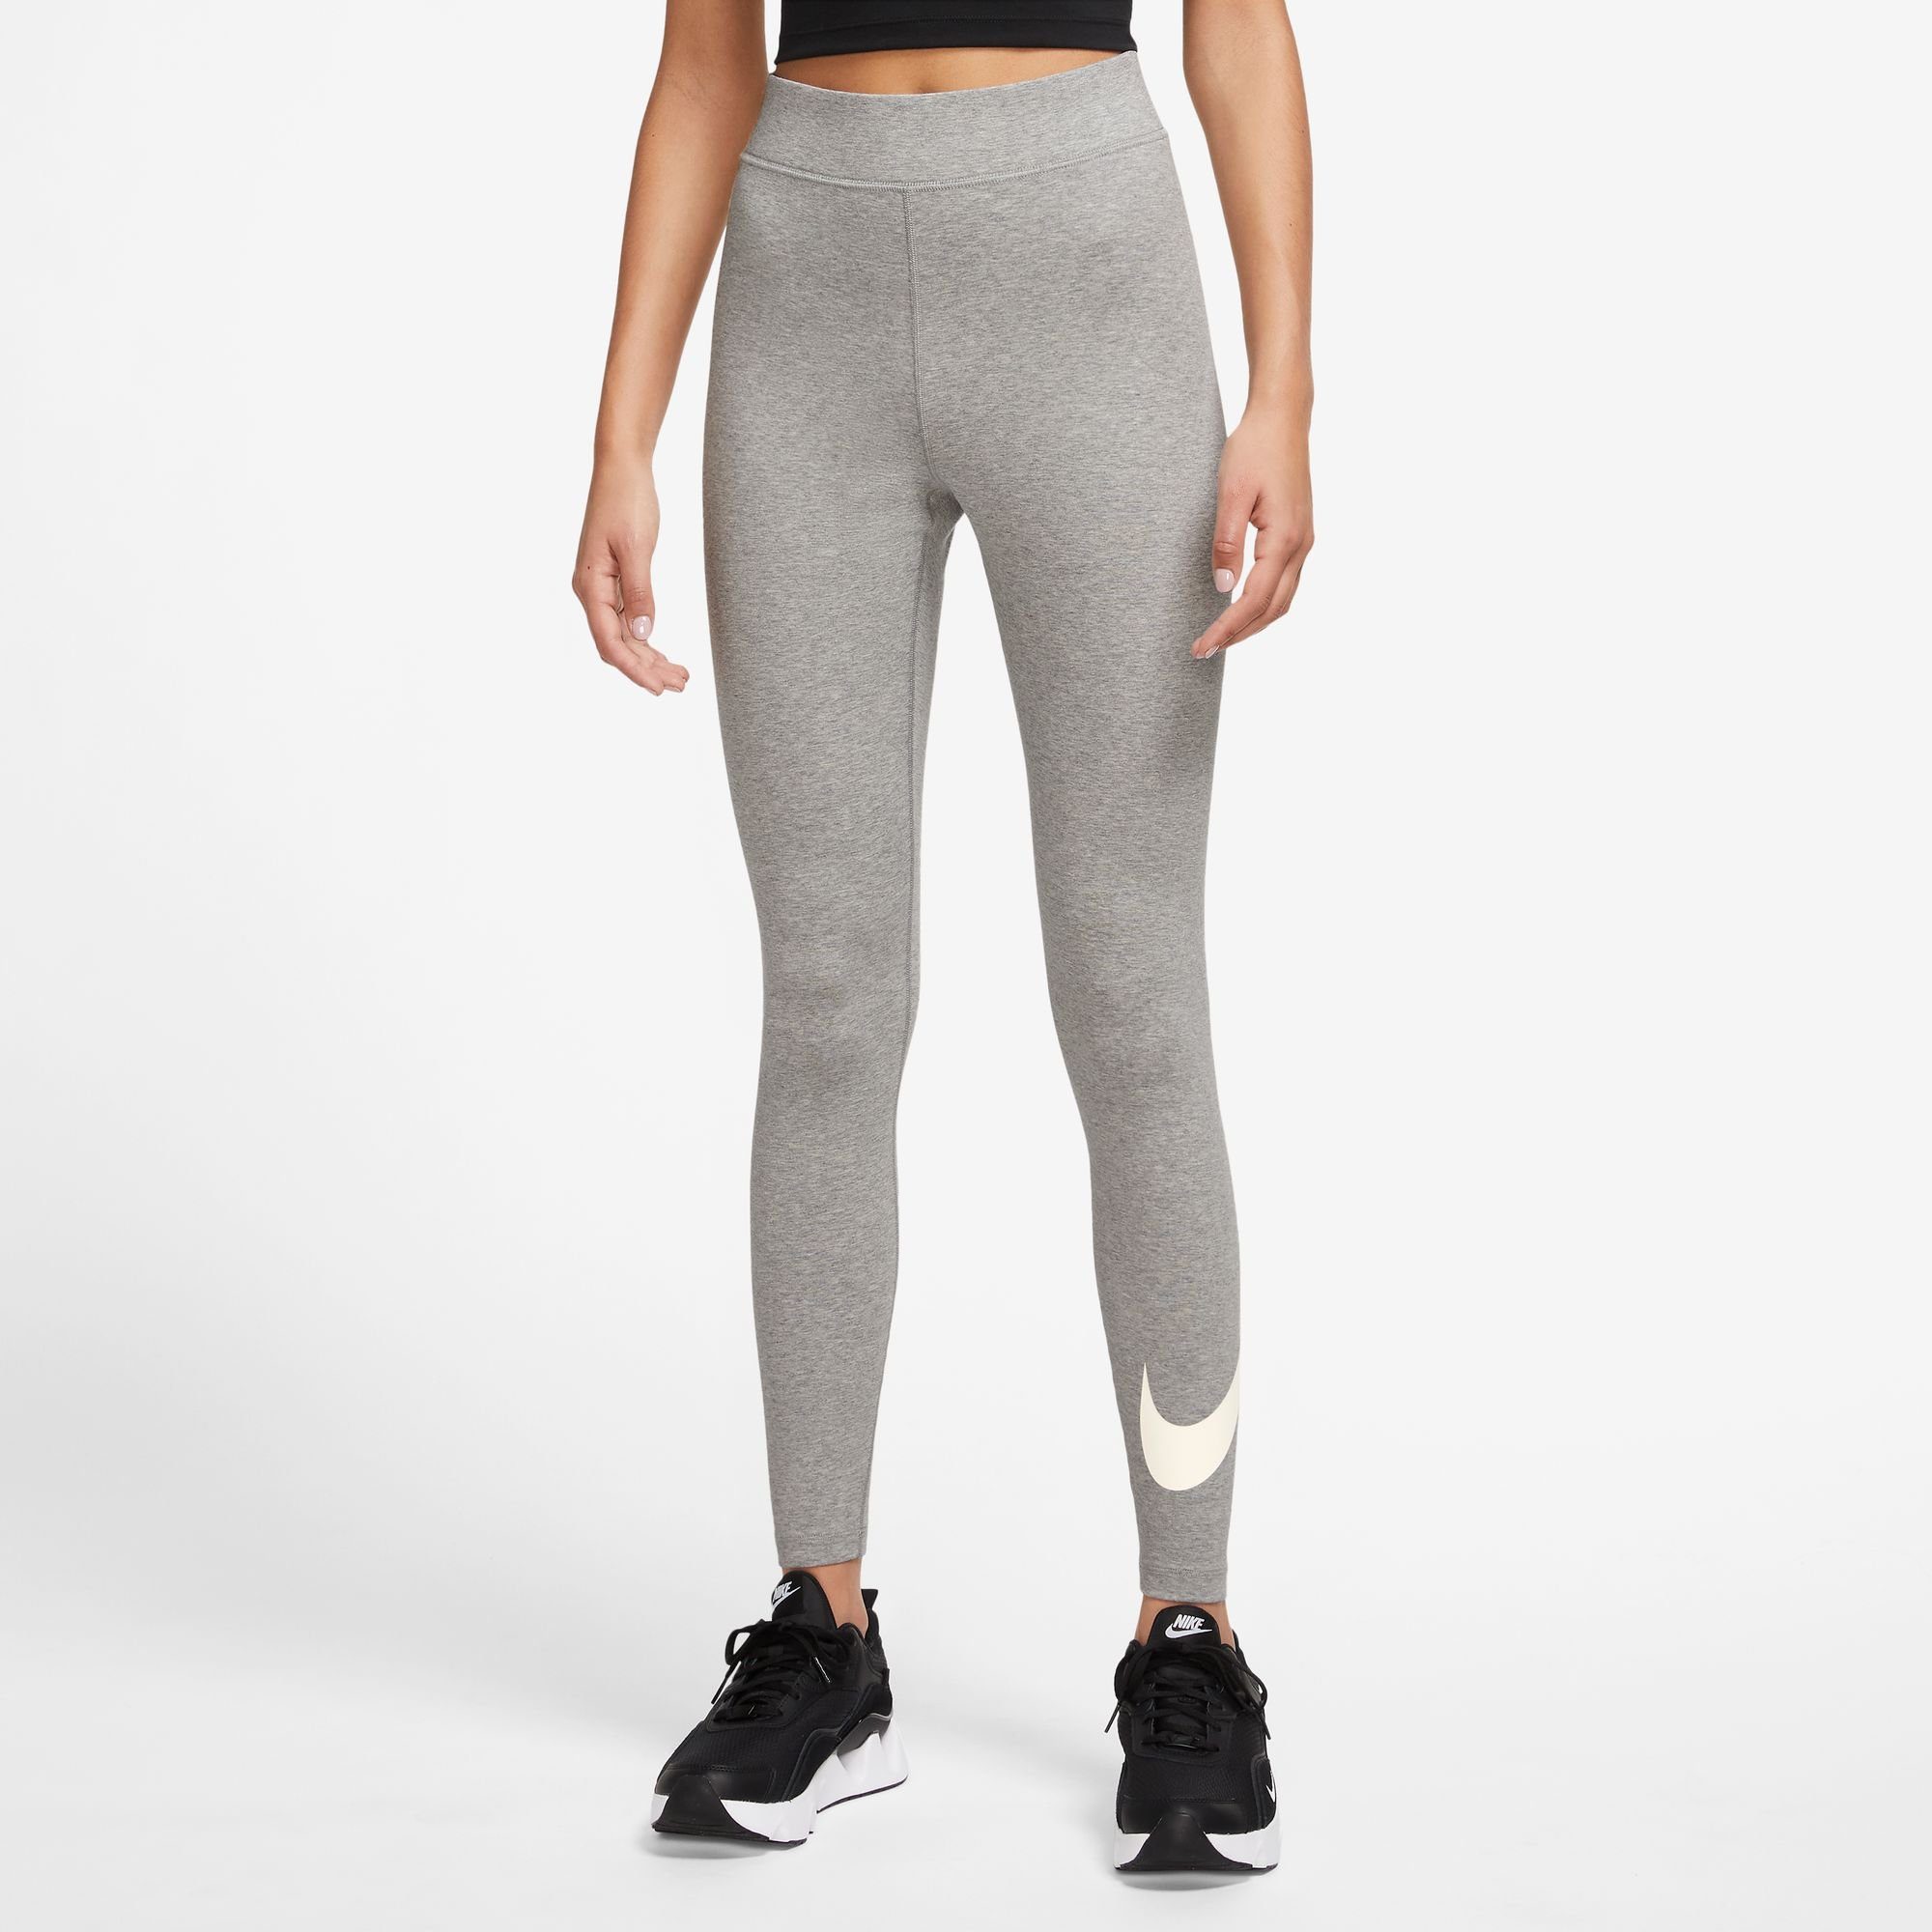 DK CLASSICS Leggings Sportswear WOMEN'S LEGGINGS Nike HEATHER/SAIL HIGH-WAISTED GREY GRAPHIC